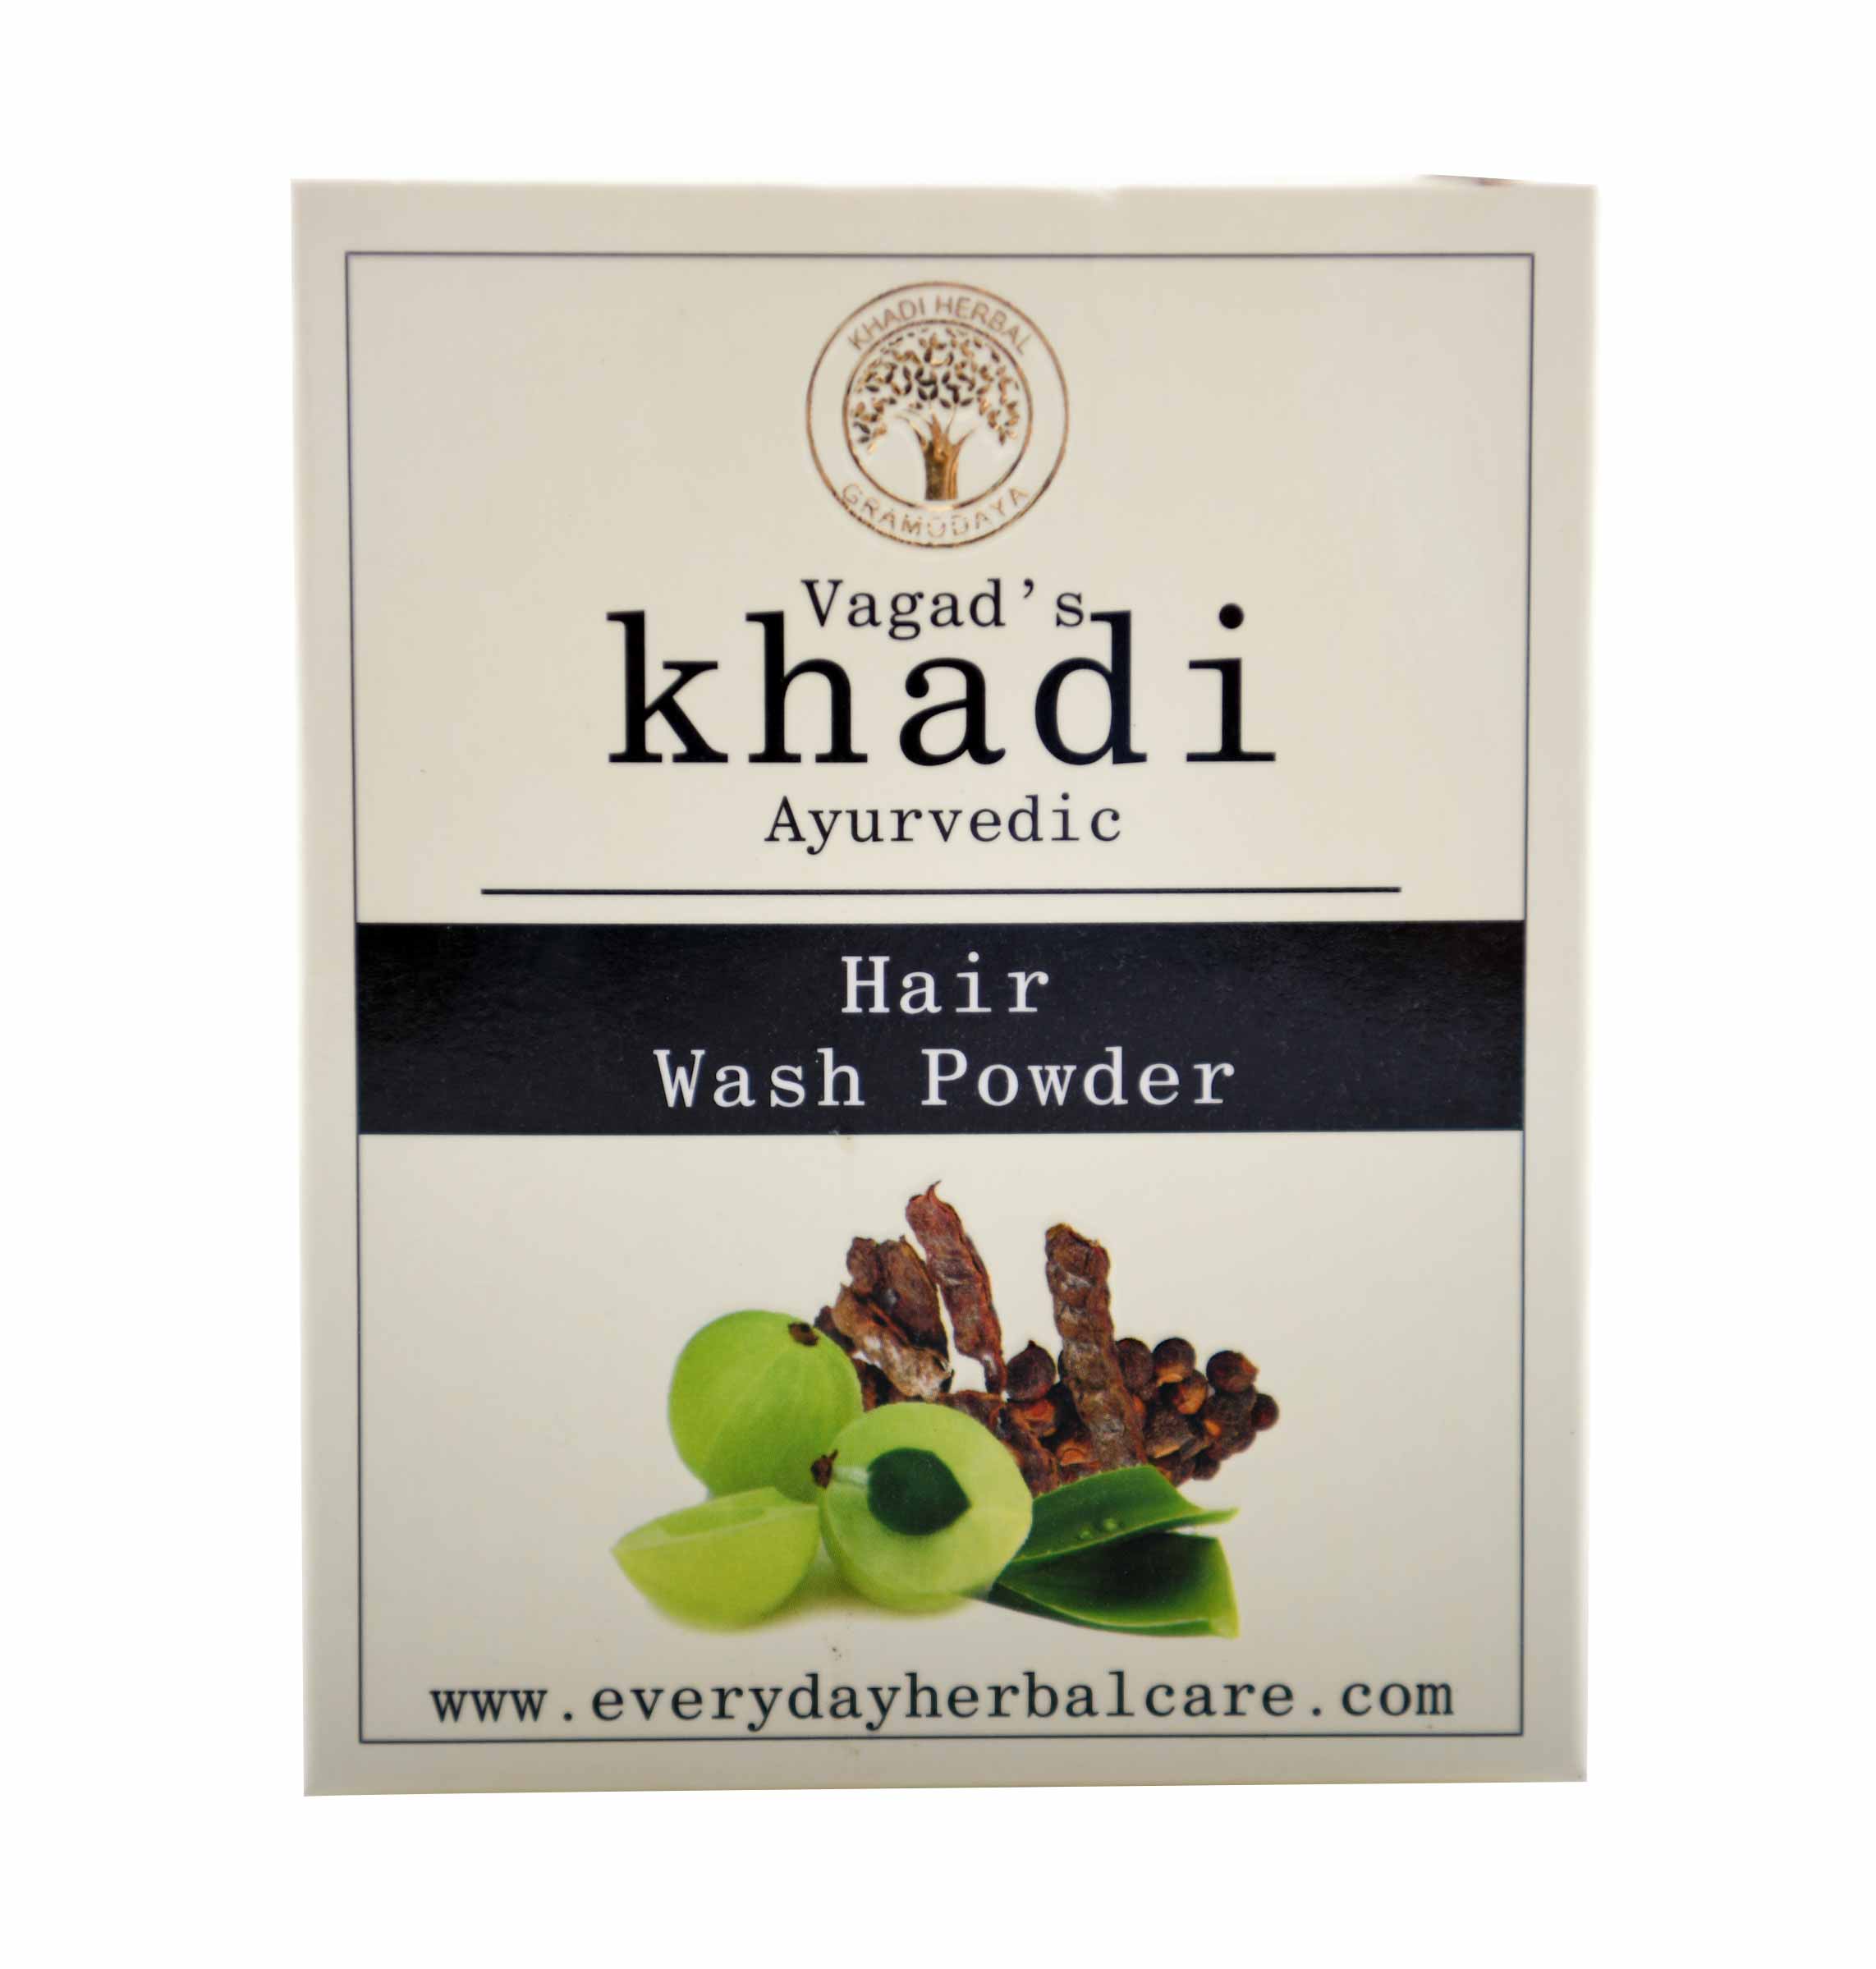 Buy Vagad's Khadi Hair Wash Powder at Best Price Online